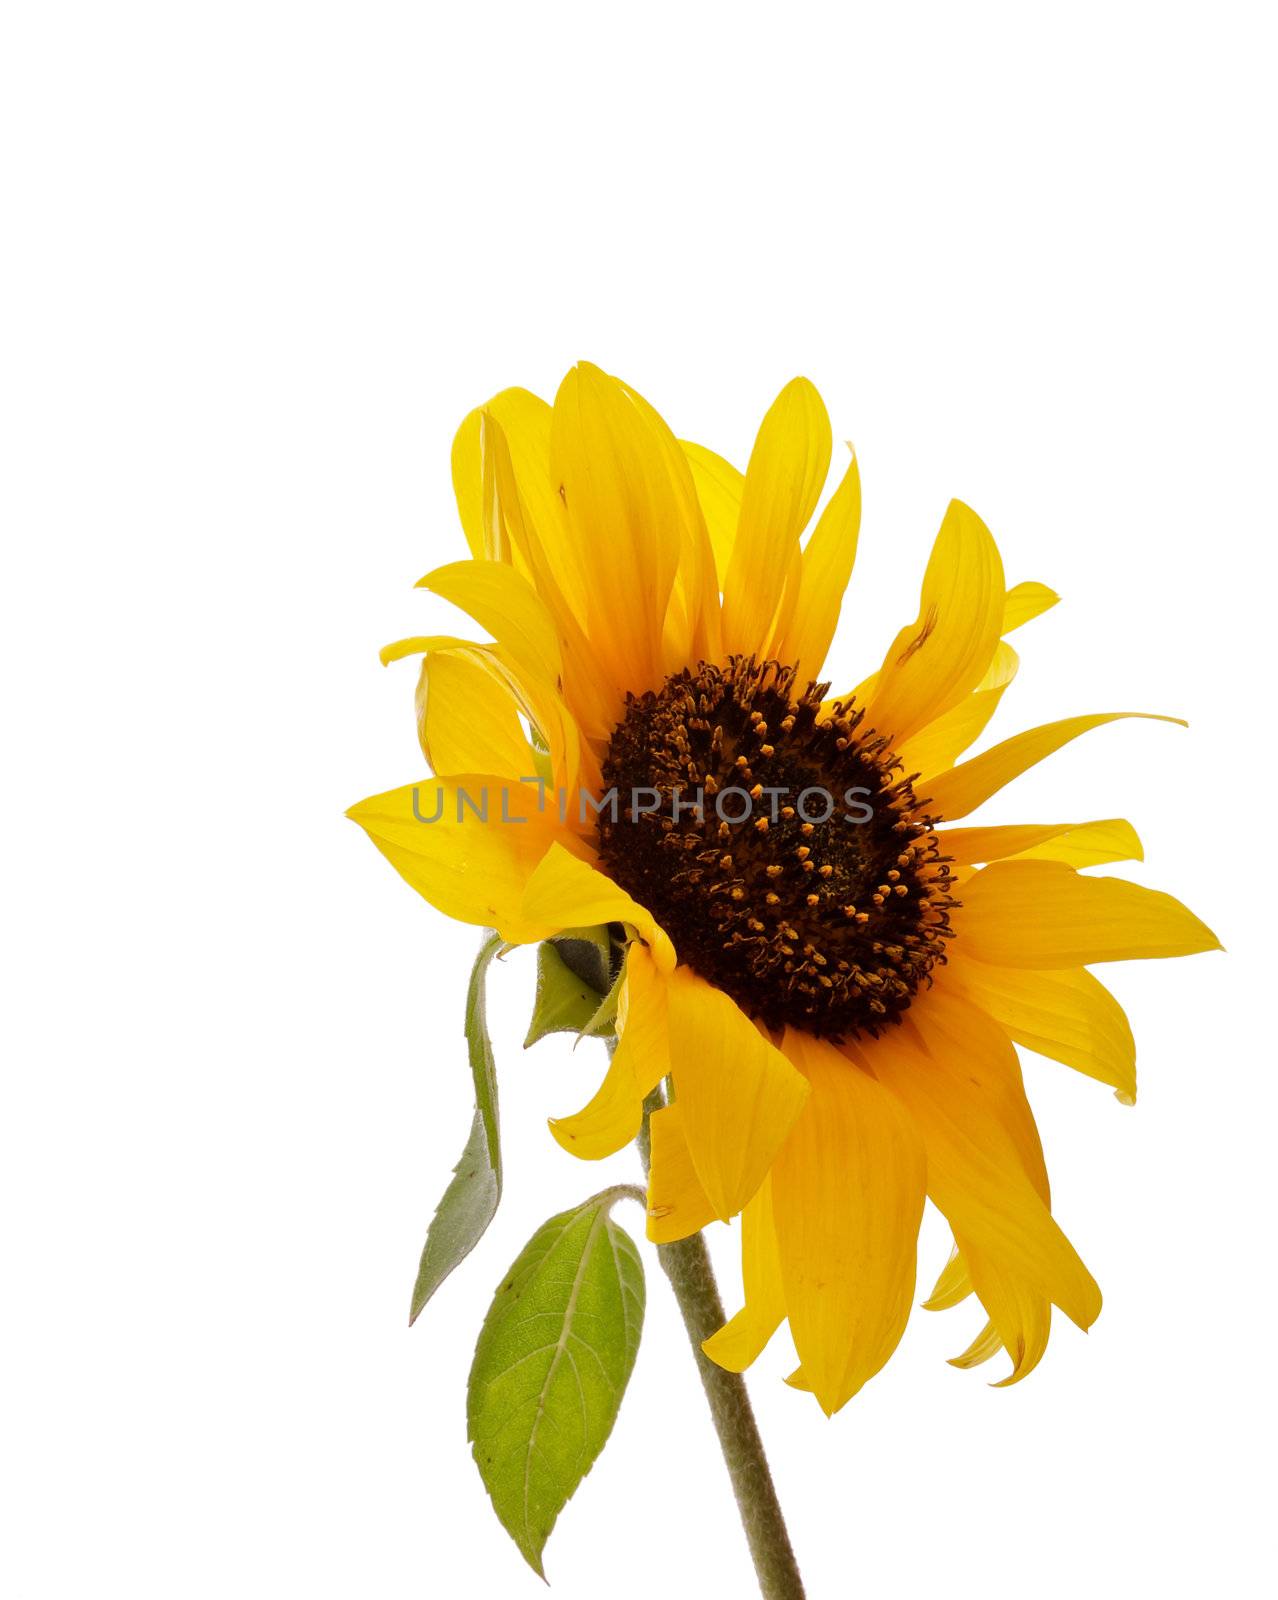 Sunflower by zhekos